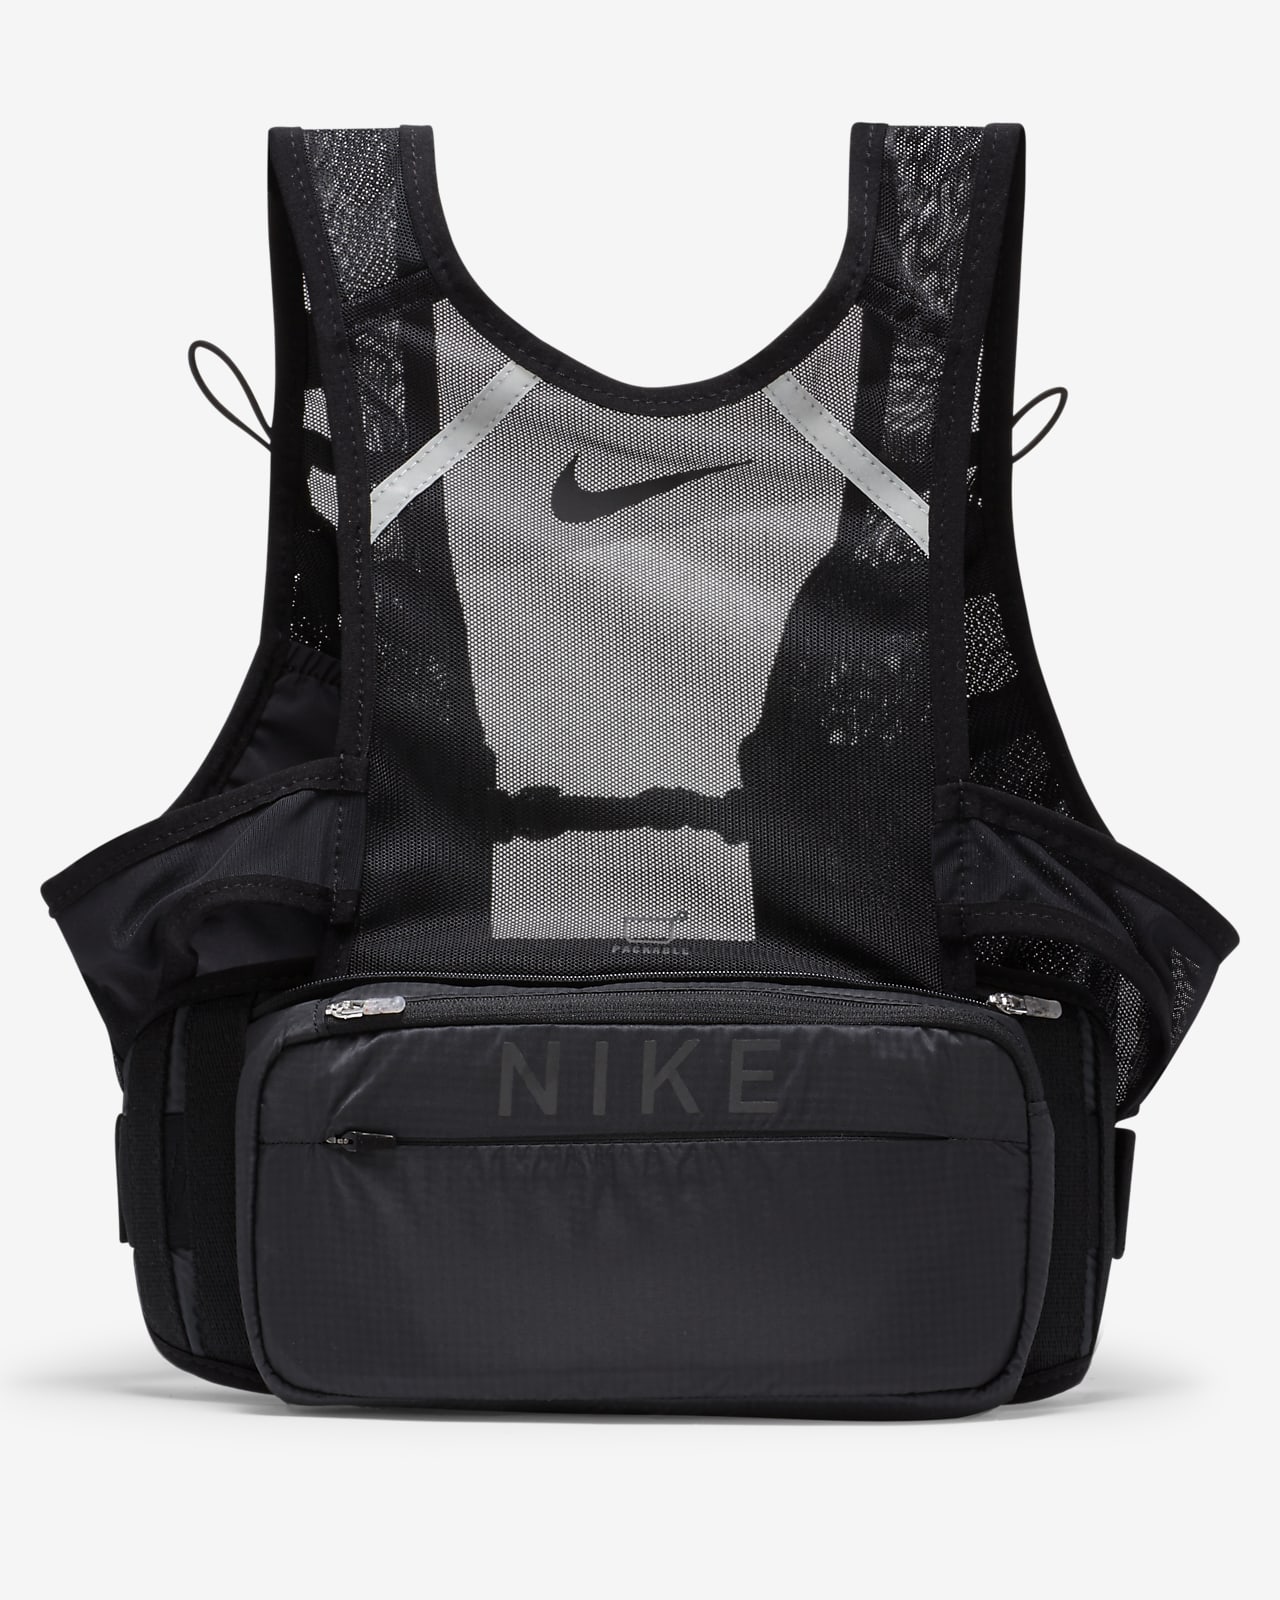 Despido eficacia Coherente Nike Transform Chaleco de running plegable. Nike ES